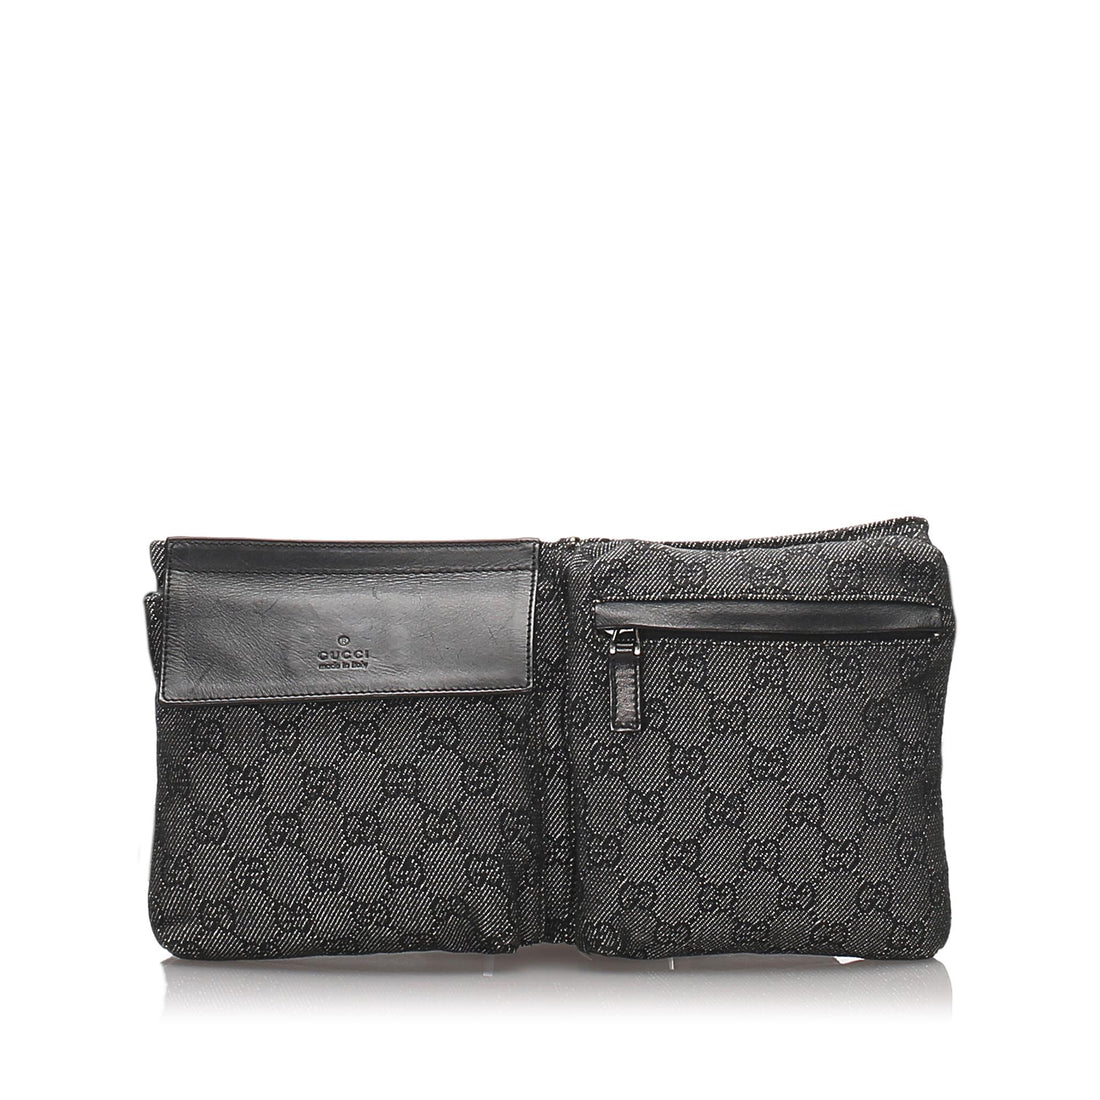 Gucci Black Monogram GG Belt Bag Fanny Pack Waist Pouch 927gk26